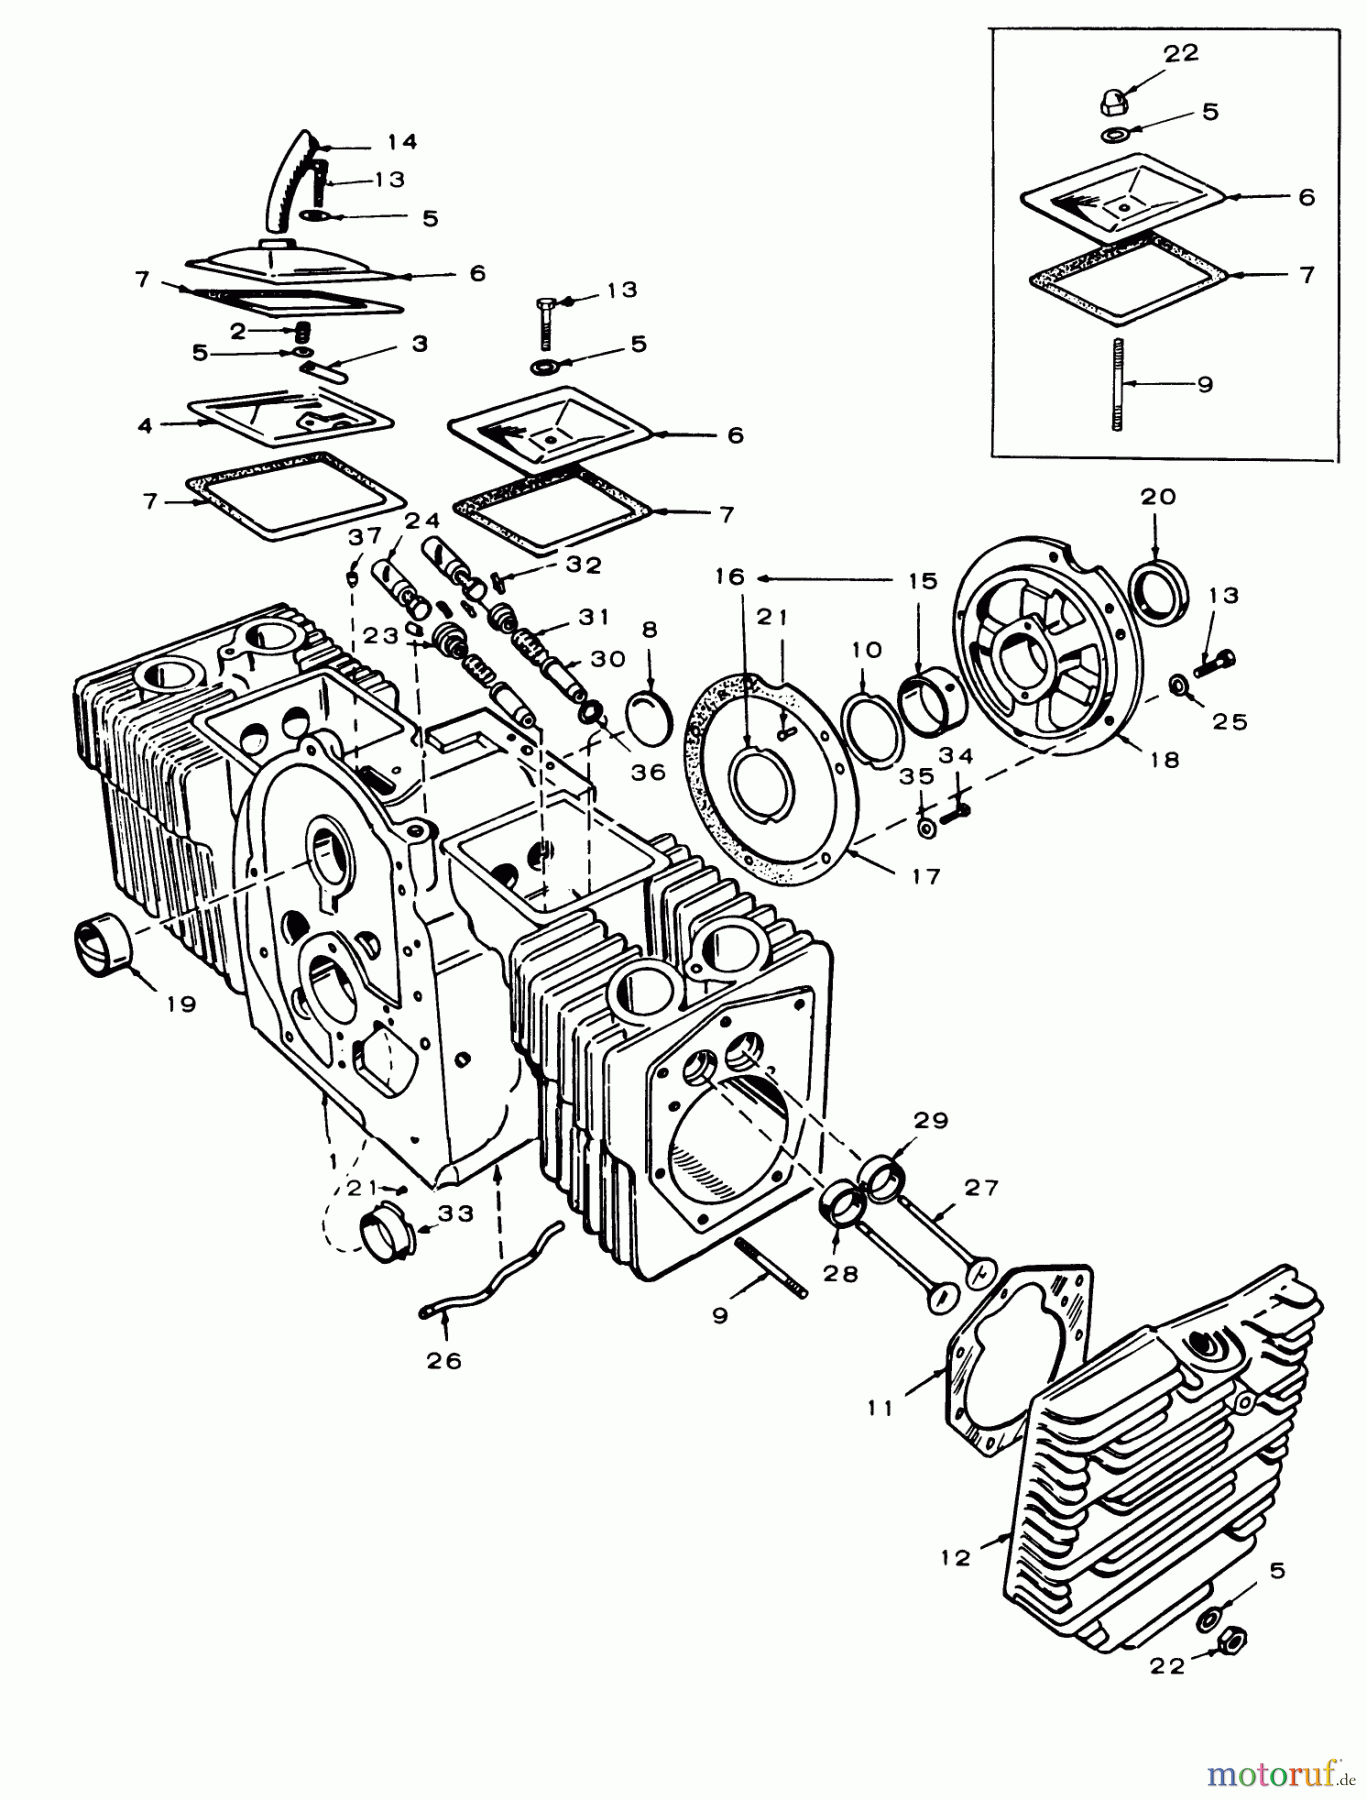  Toro Neu Mowers, Lawn & Garden Tractor Seite 1 61-20KS01 (D-200) - Toro D-200 Automatic Tractor, 1976 CYLINDER BLOCK GROUP-16 HP ONAN ENGINE